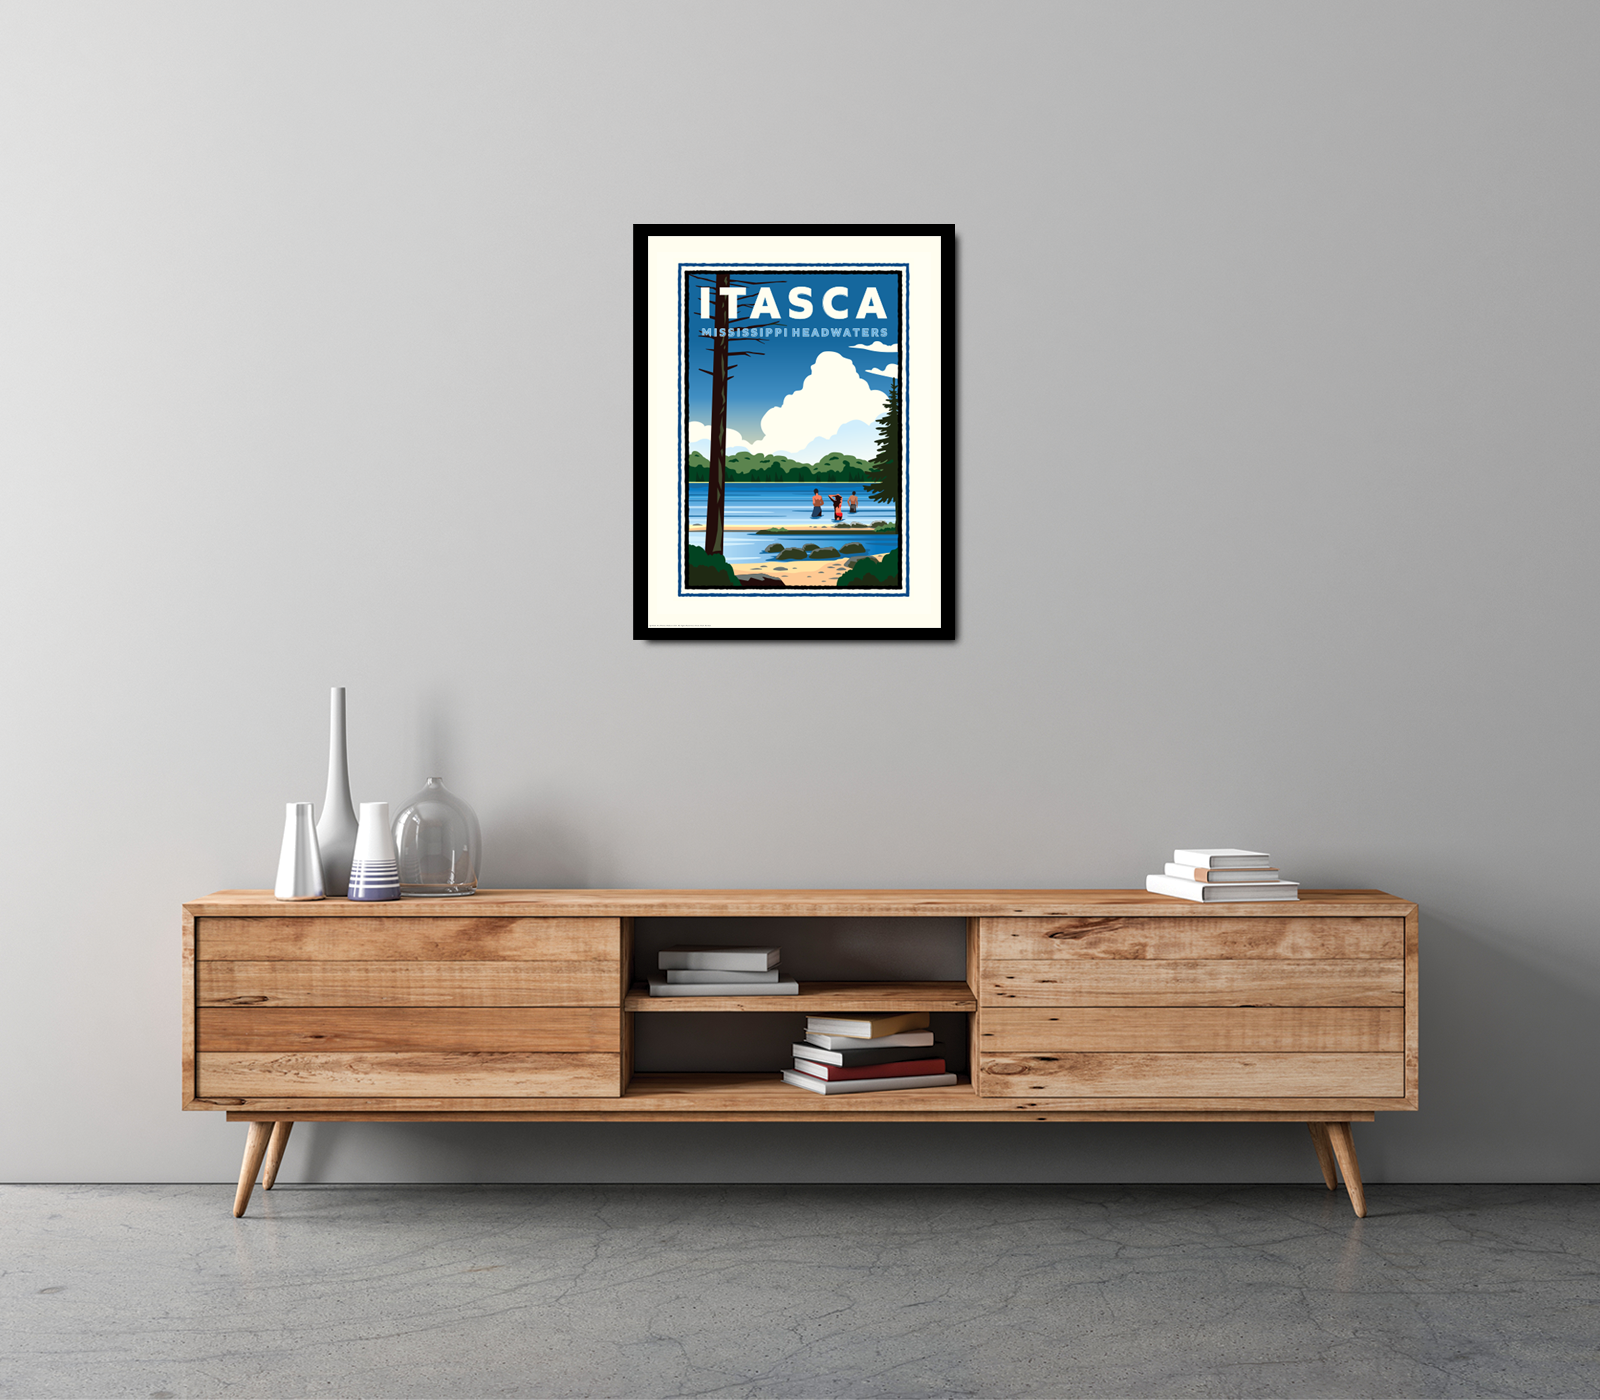 Landmark MN | Itasca State Park Art Print